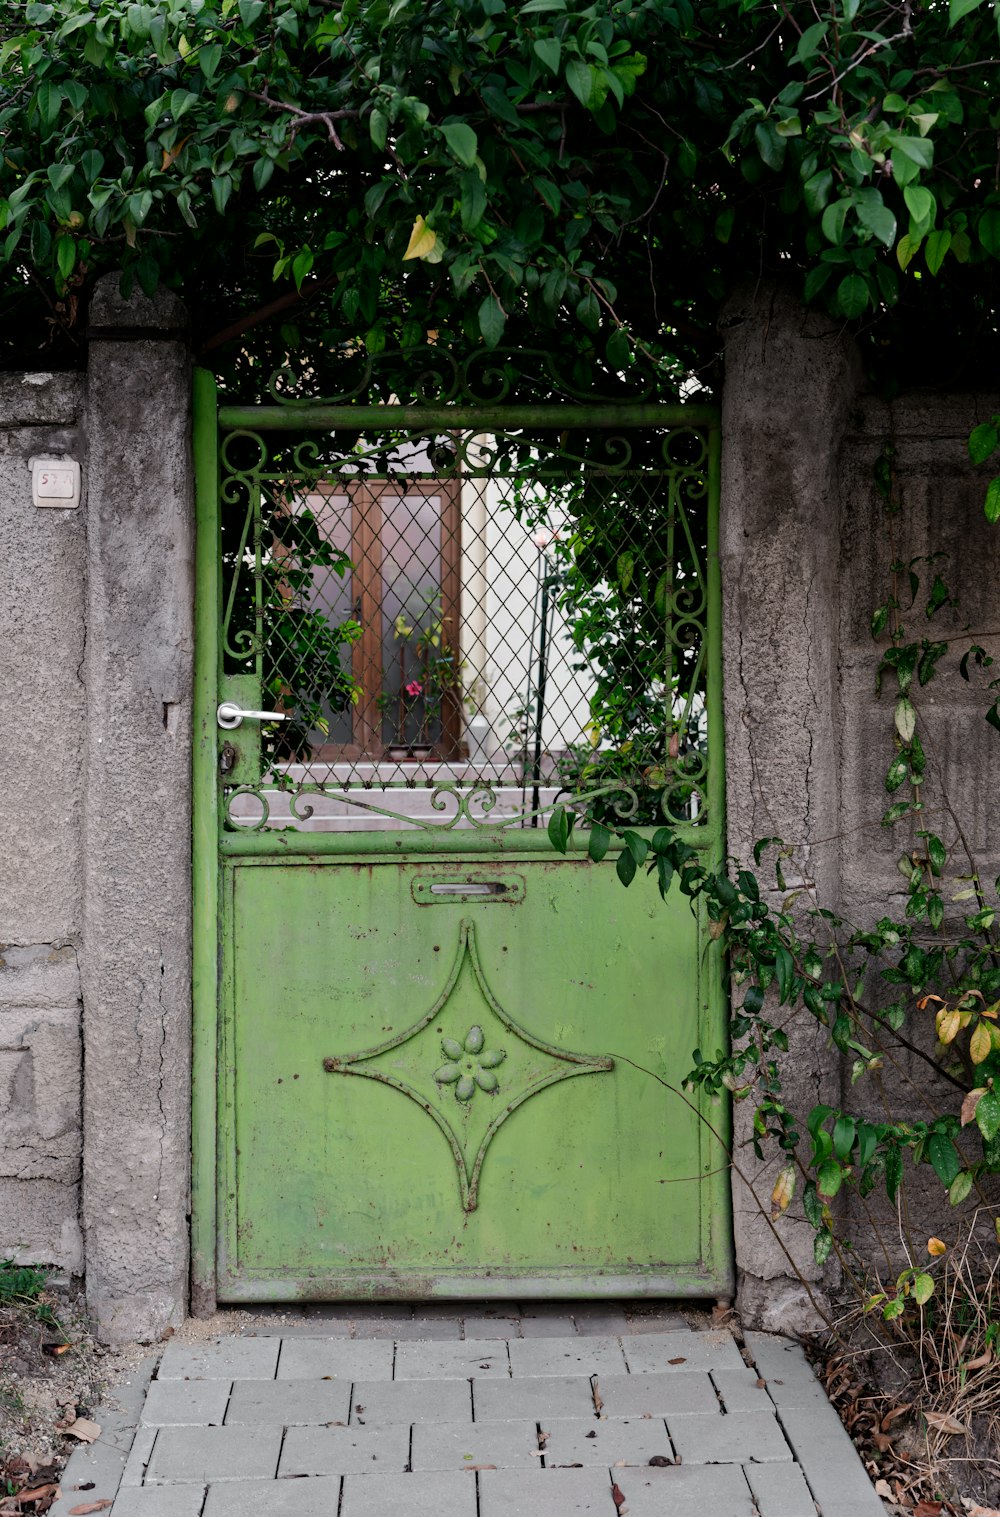 a green door with a brick walkway in front of it